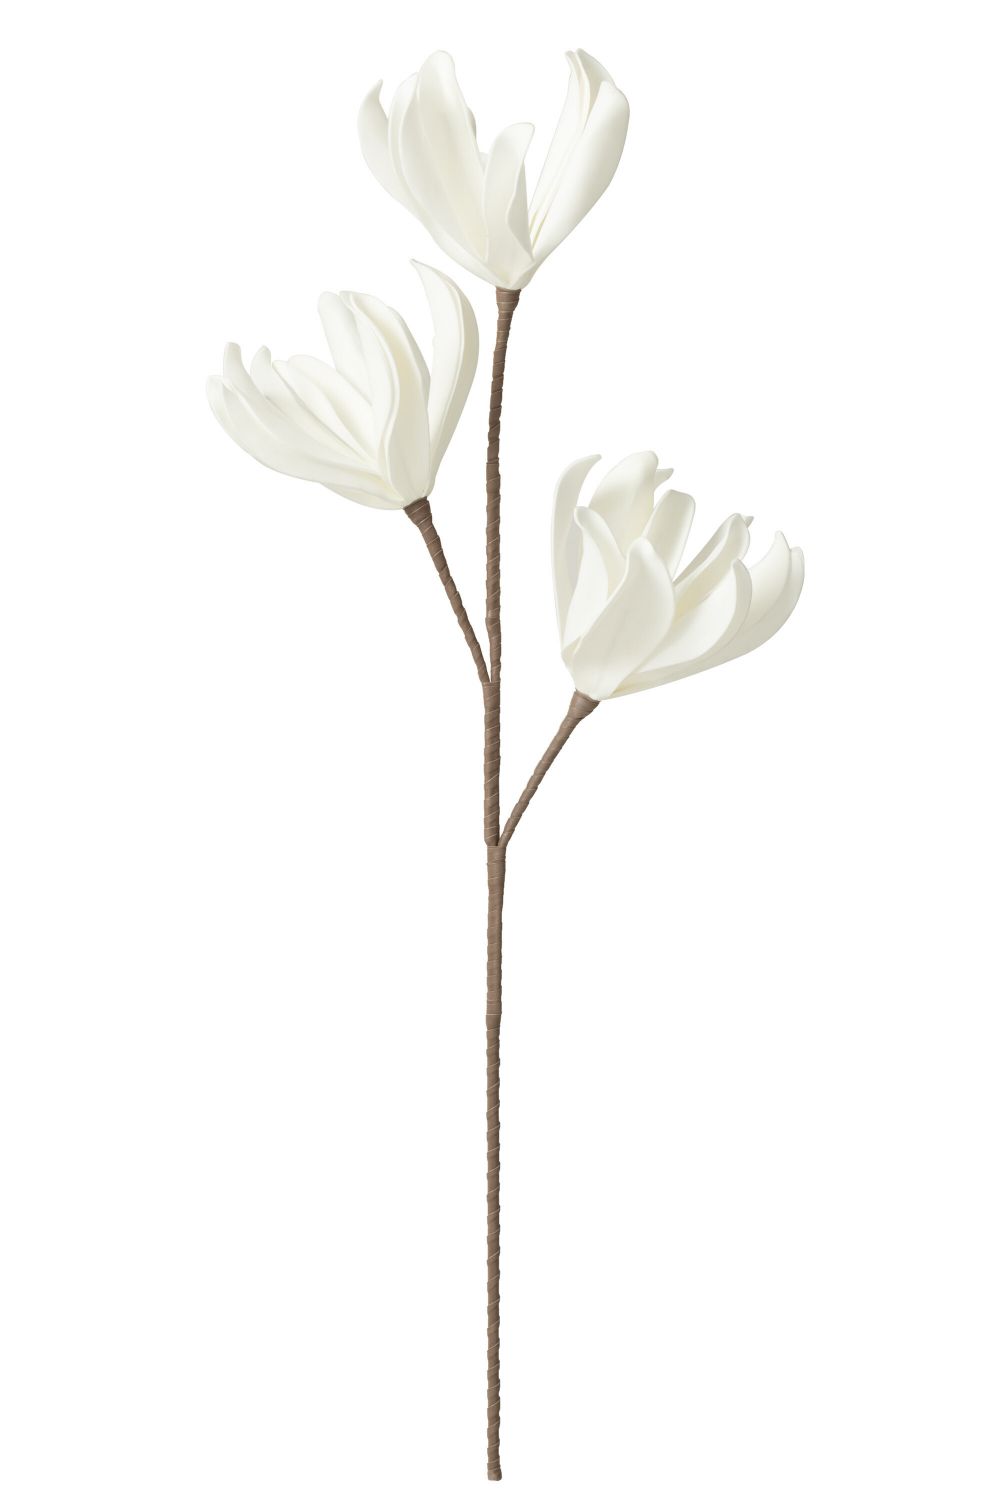 32940-fleurs-feuilles-3 tetes-branche-blanc-jolipa